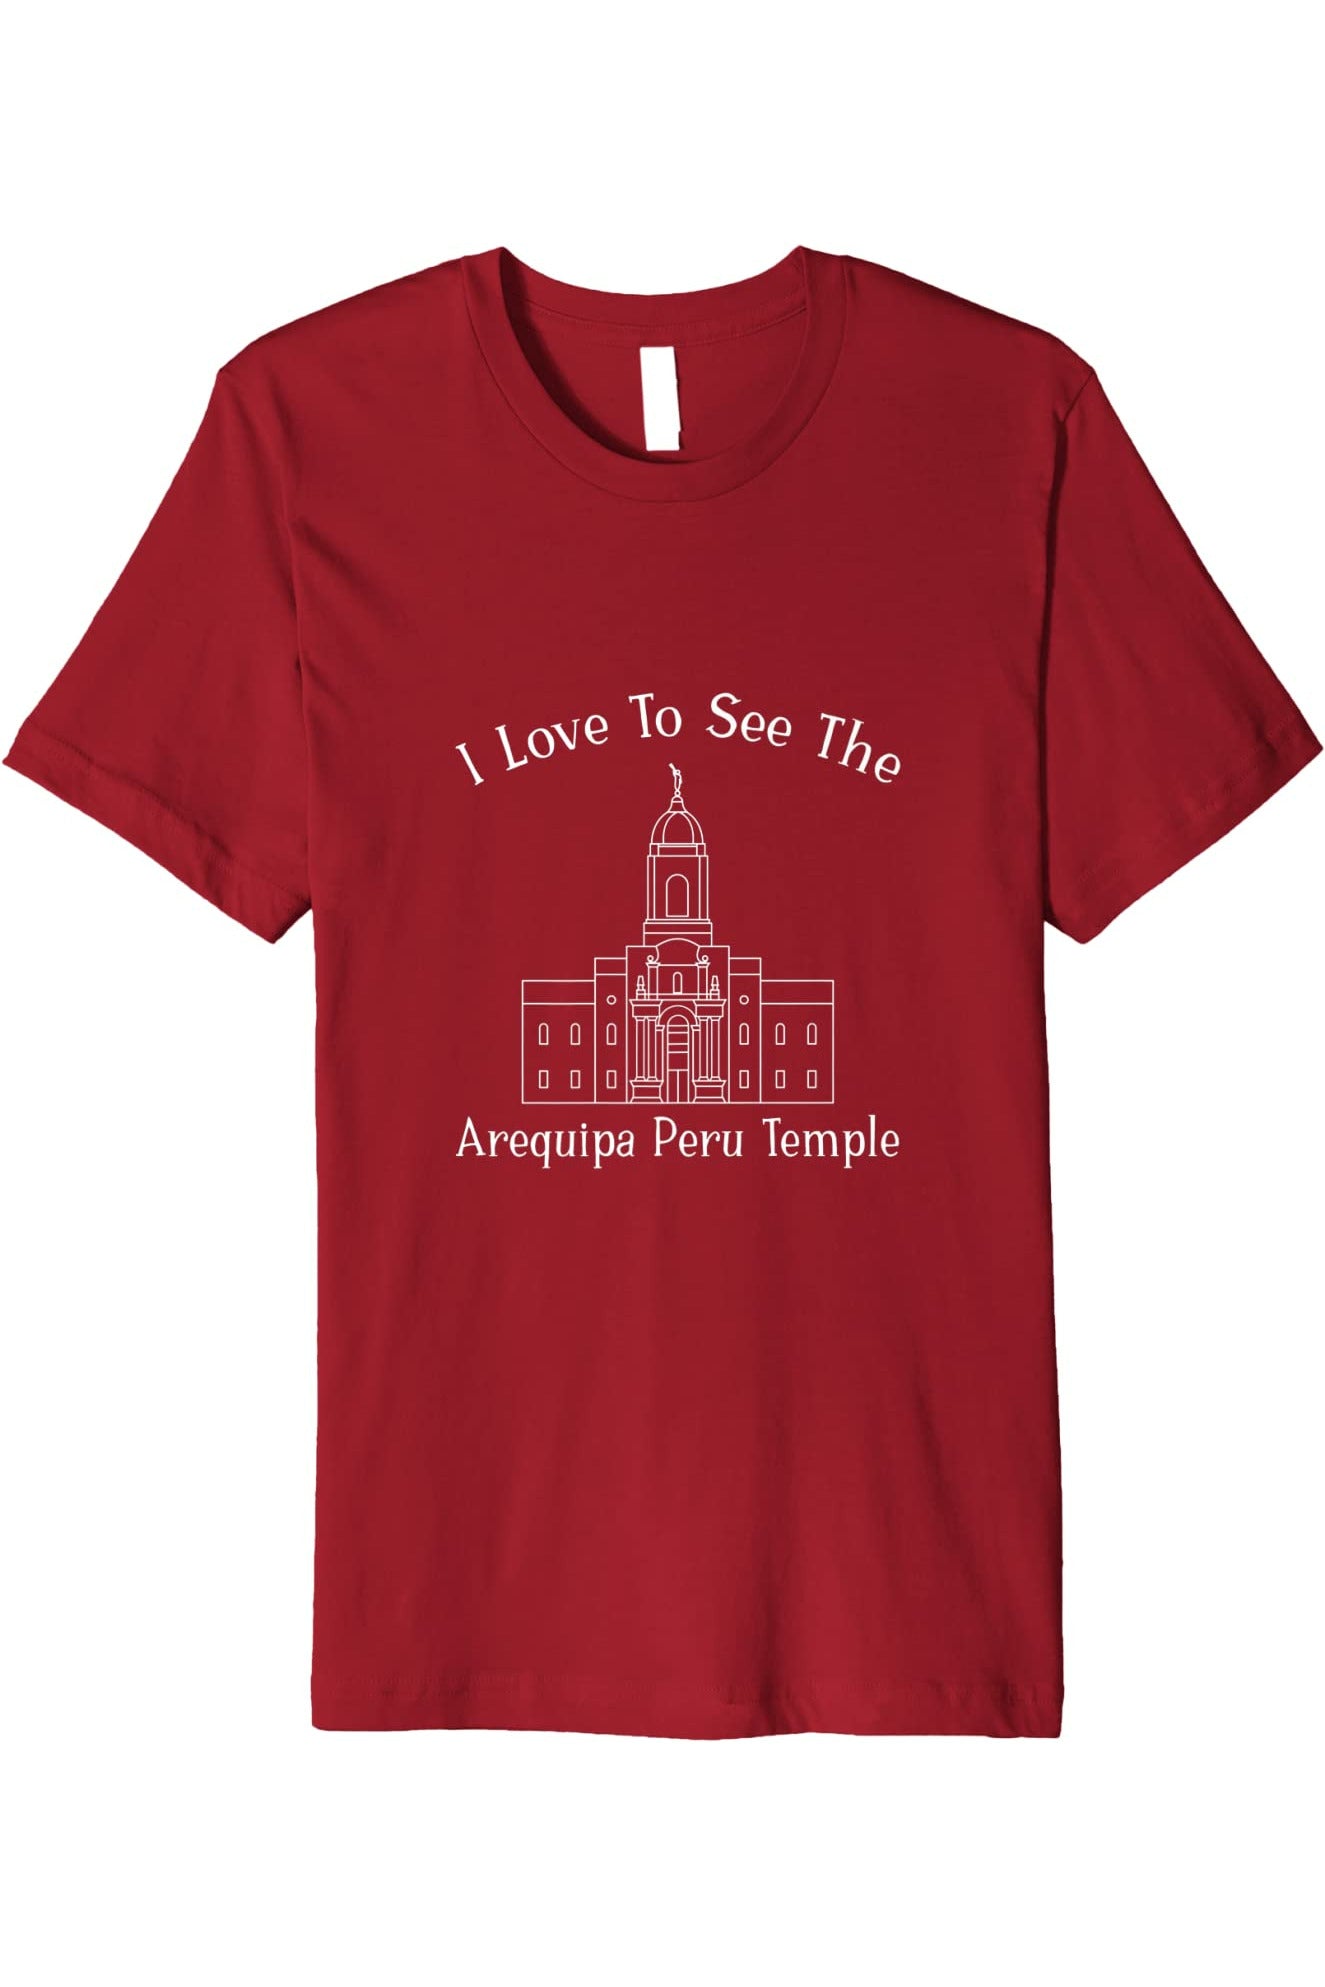 Arequipa Peru Temple T-Shirt - Premium - Happy Style (English) US